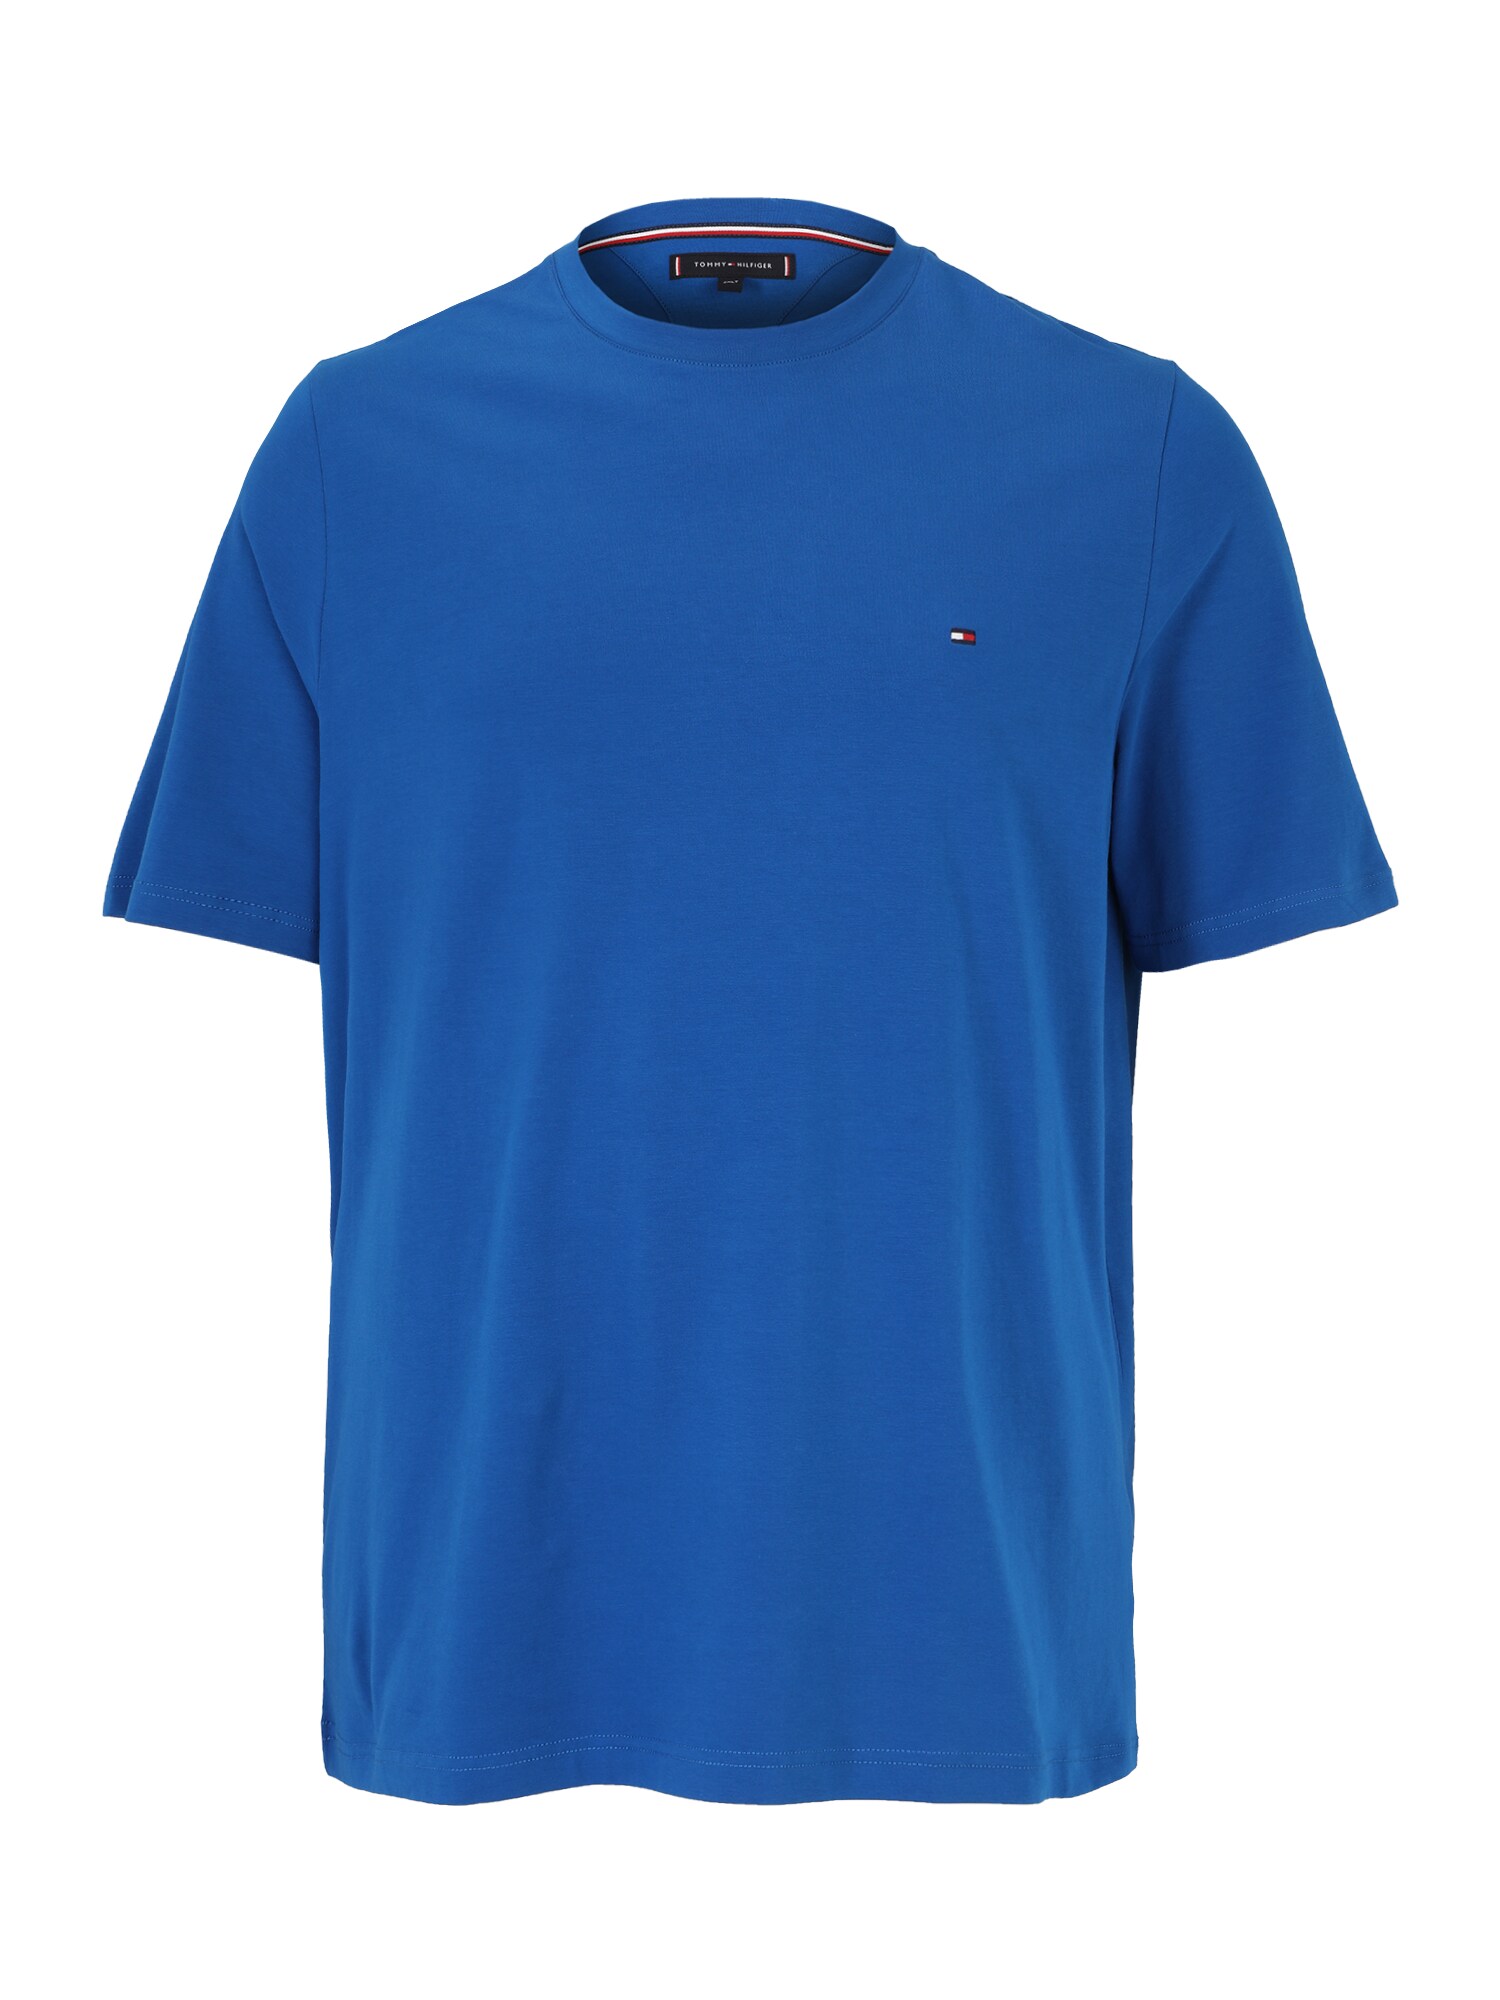 Tommy Hilfiger Big & Tall Marškinėliai mėlyna / tamsiai mėlyna / balta / raudona